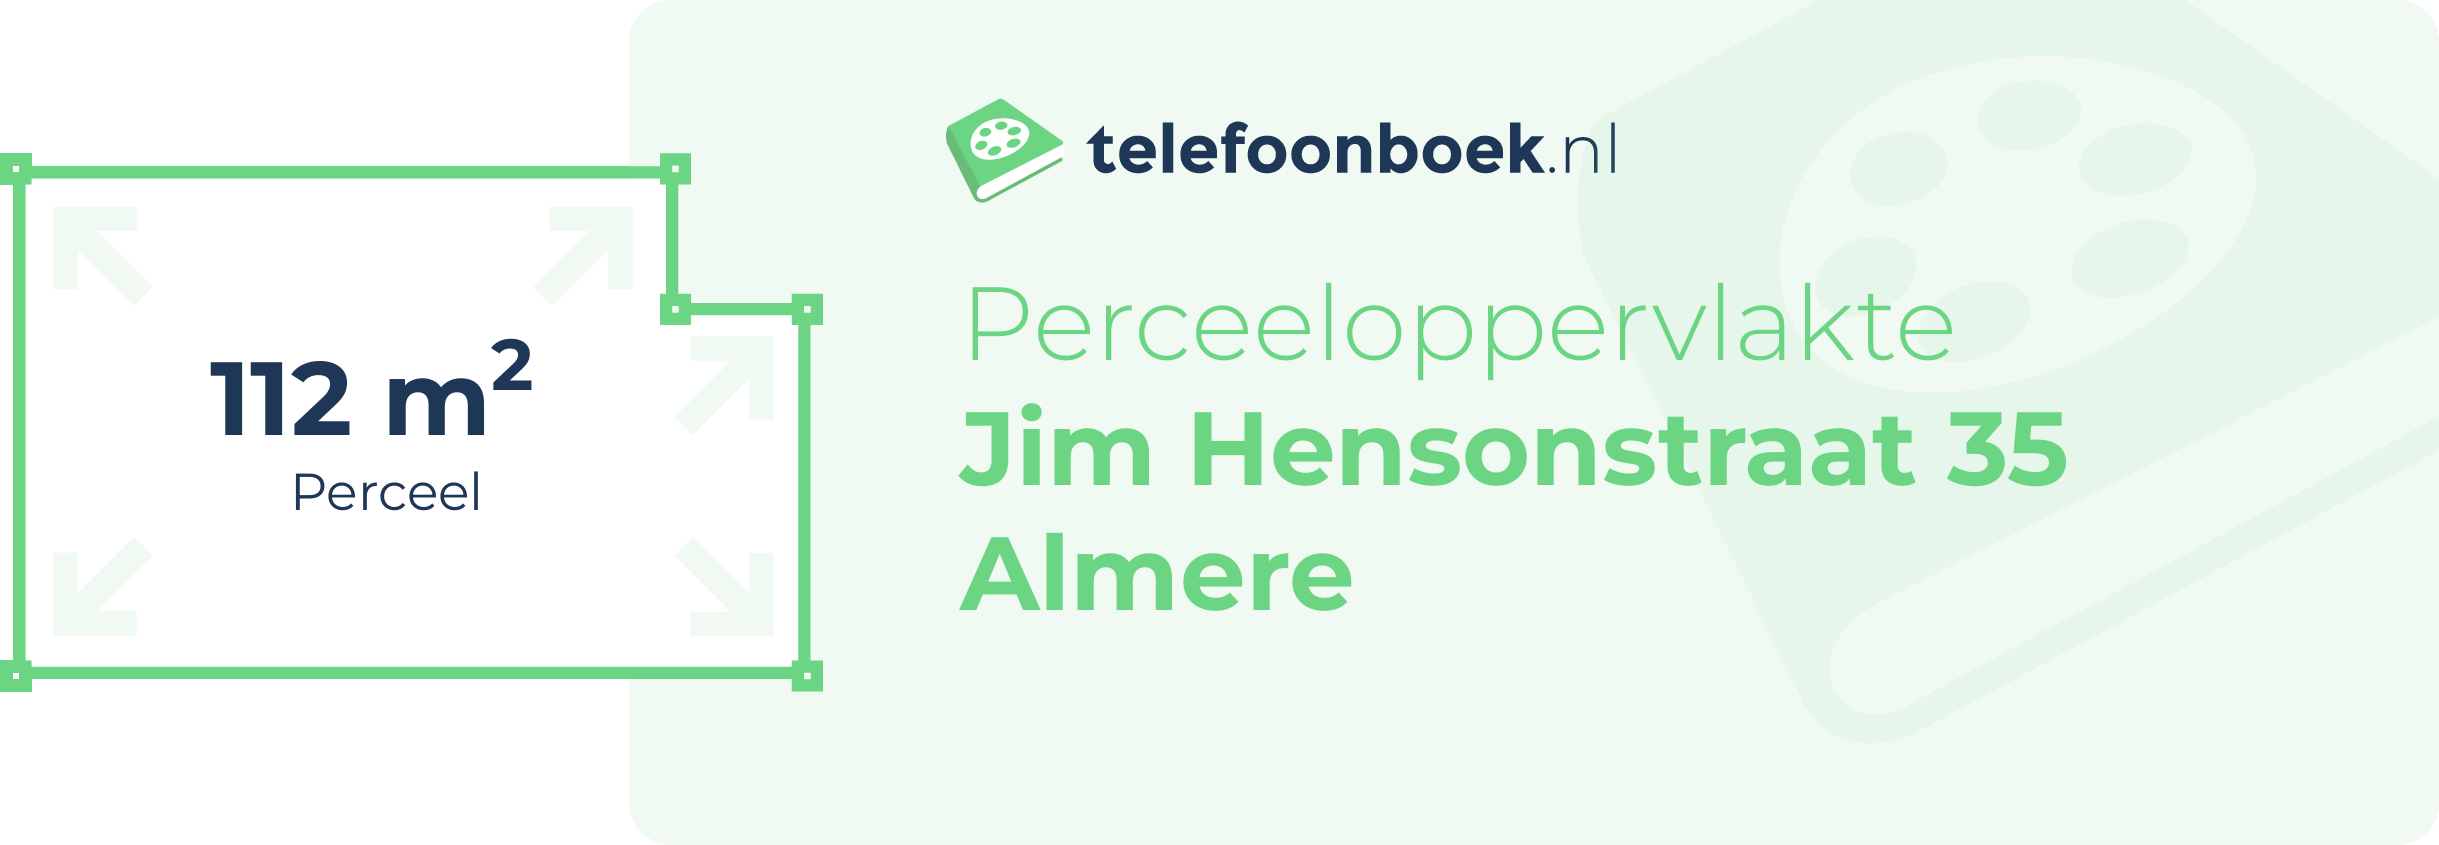 Perceeloppervlakte Jim Hensonstraat 35 Almere